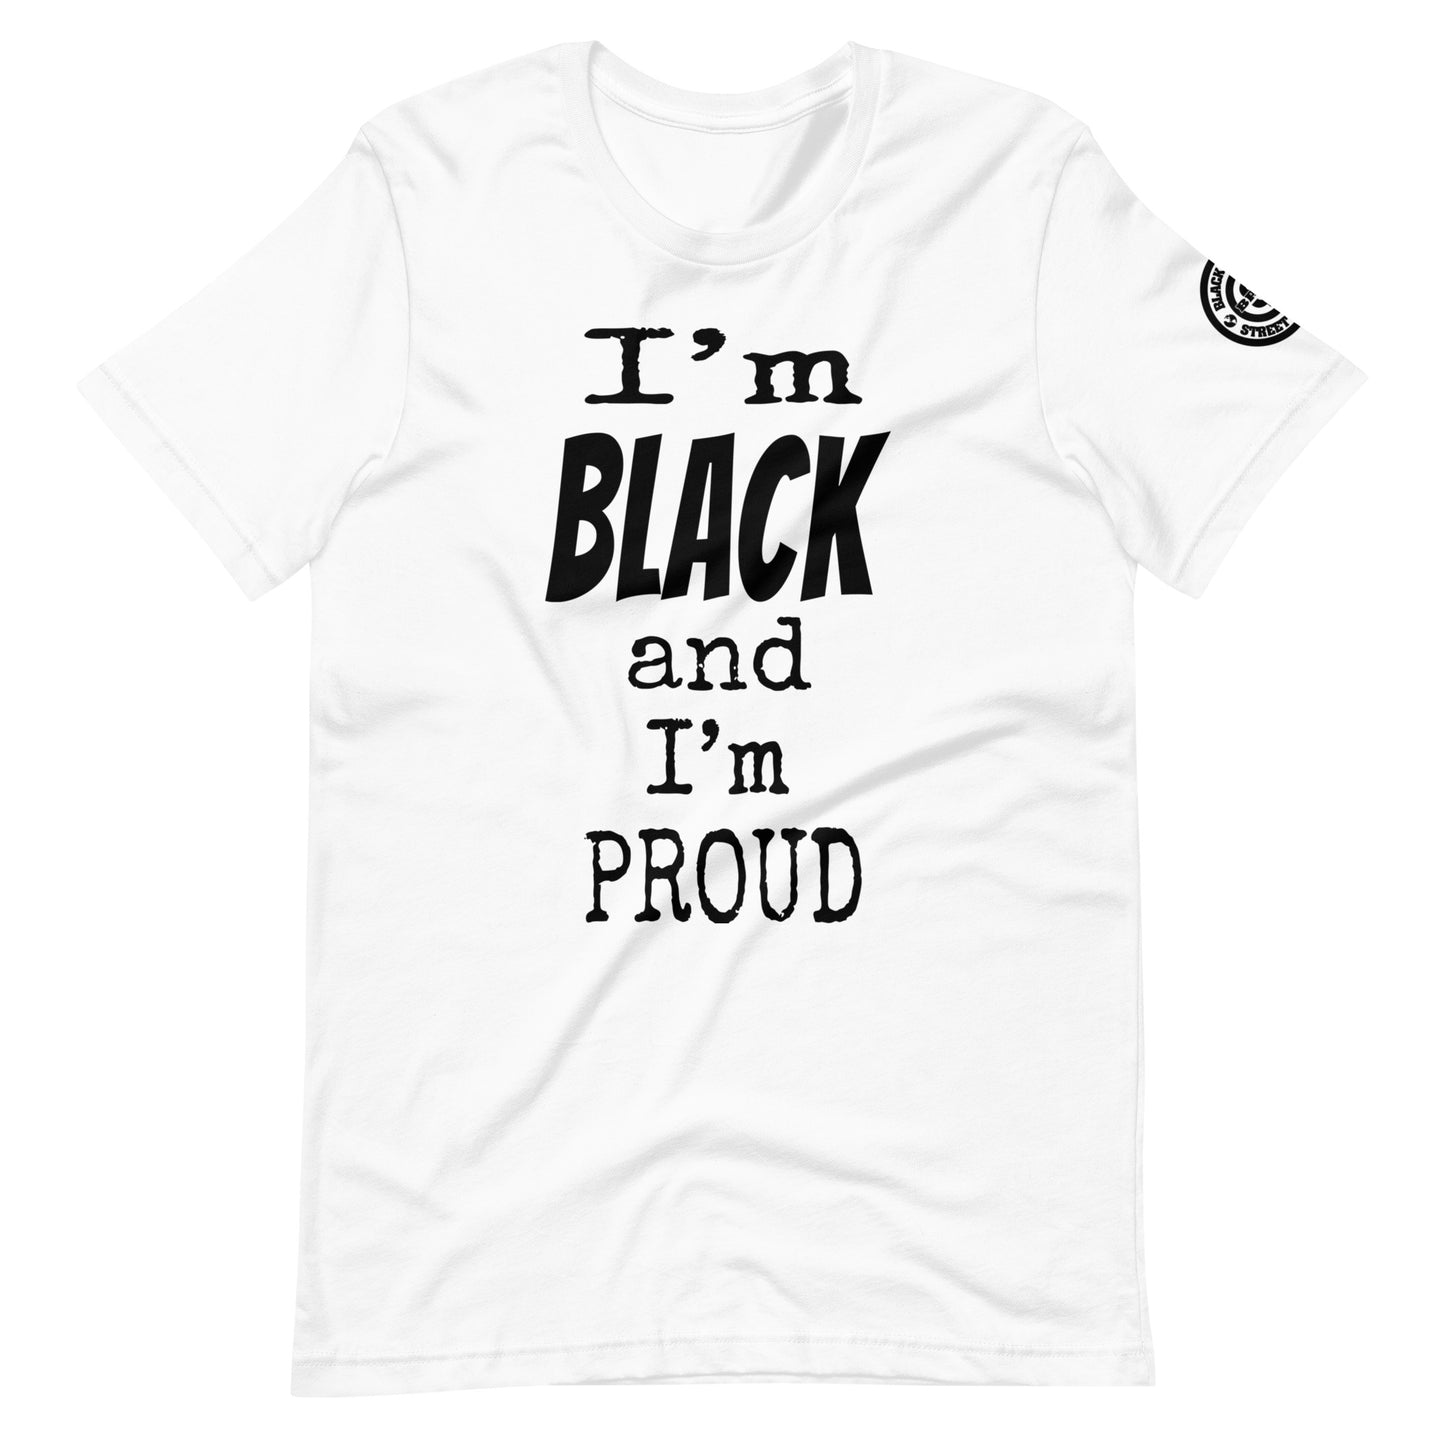 Black Paper - I AM BLACK